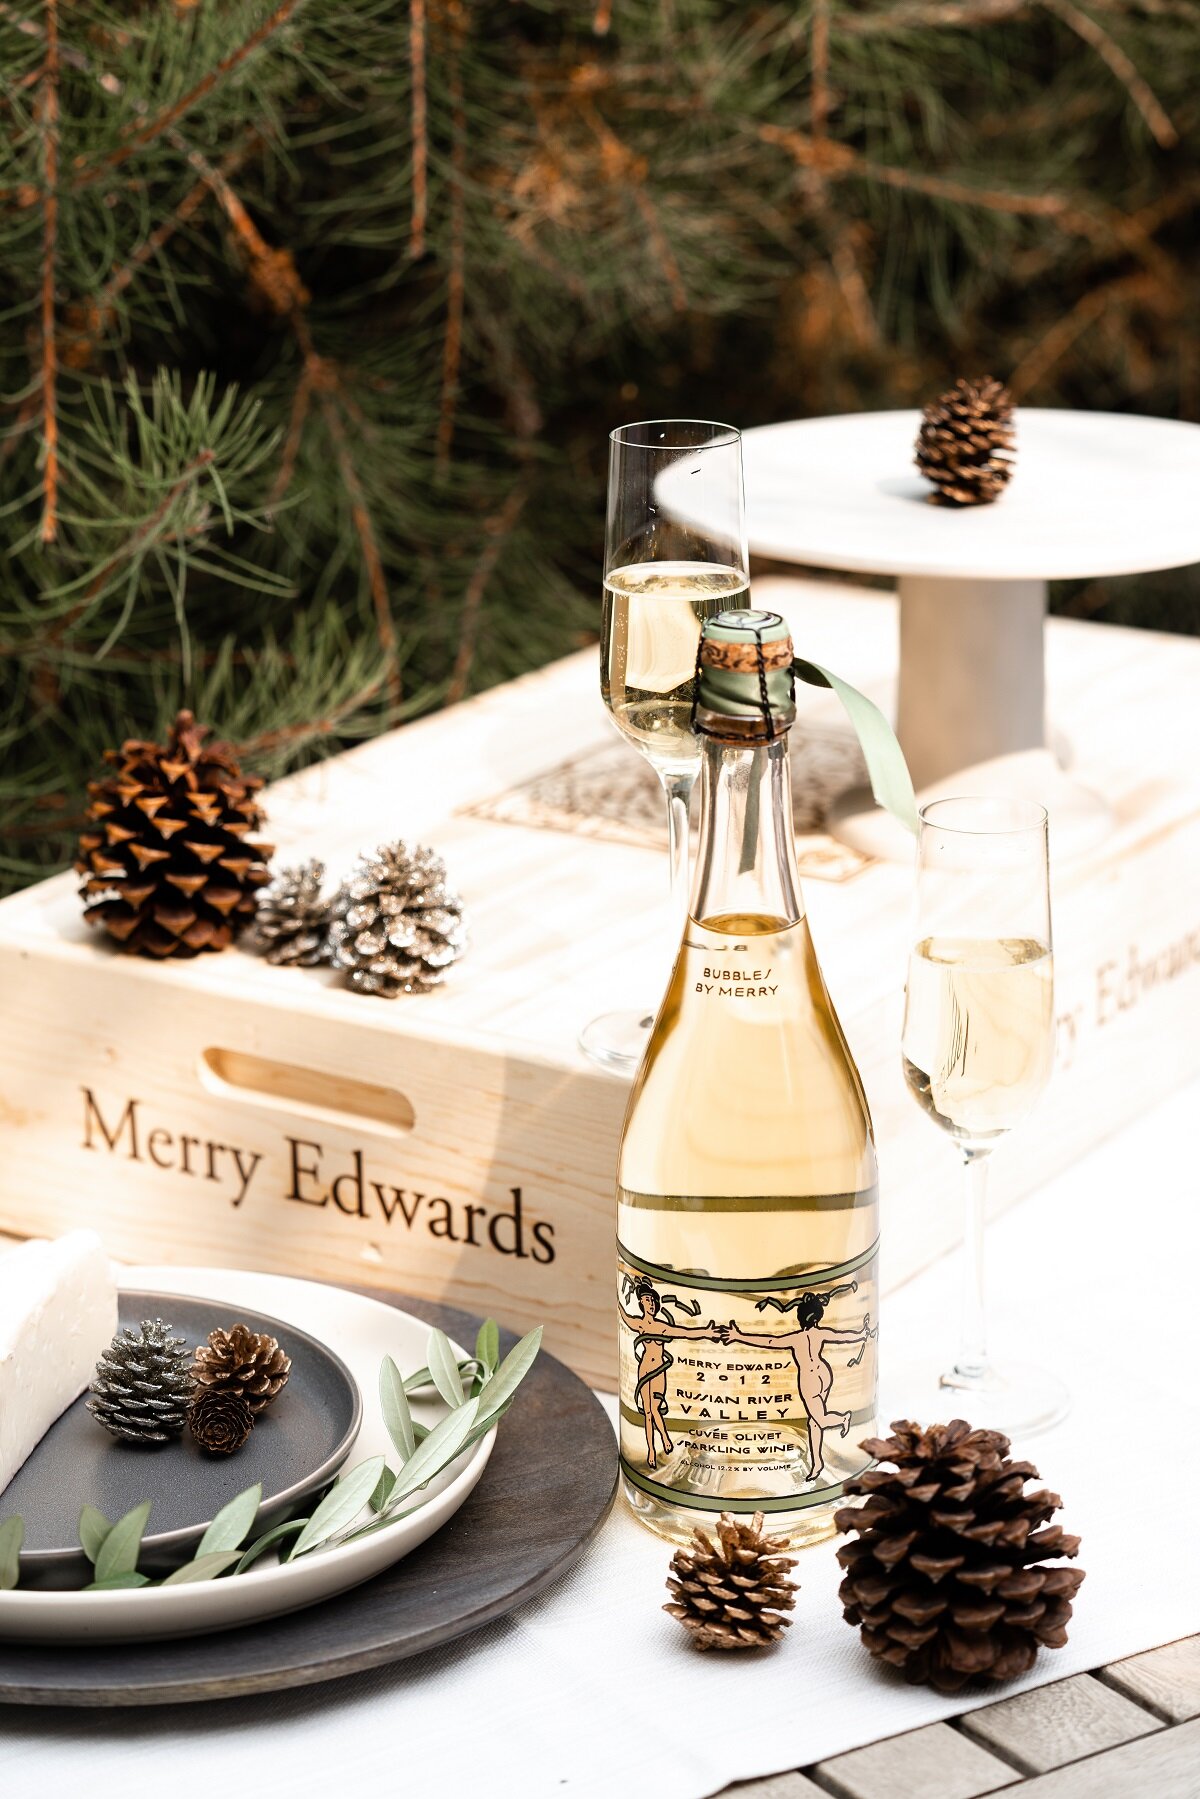 Merry Edwards Winery